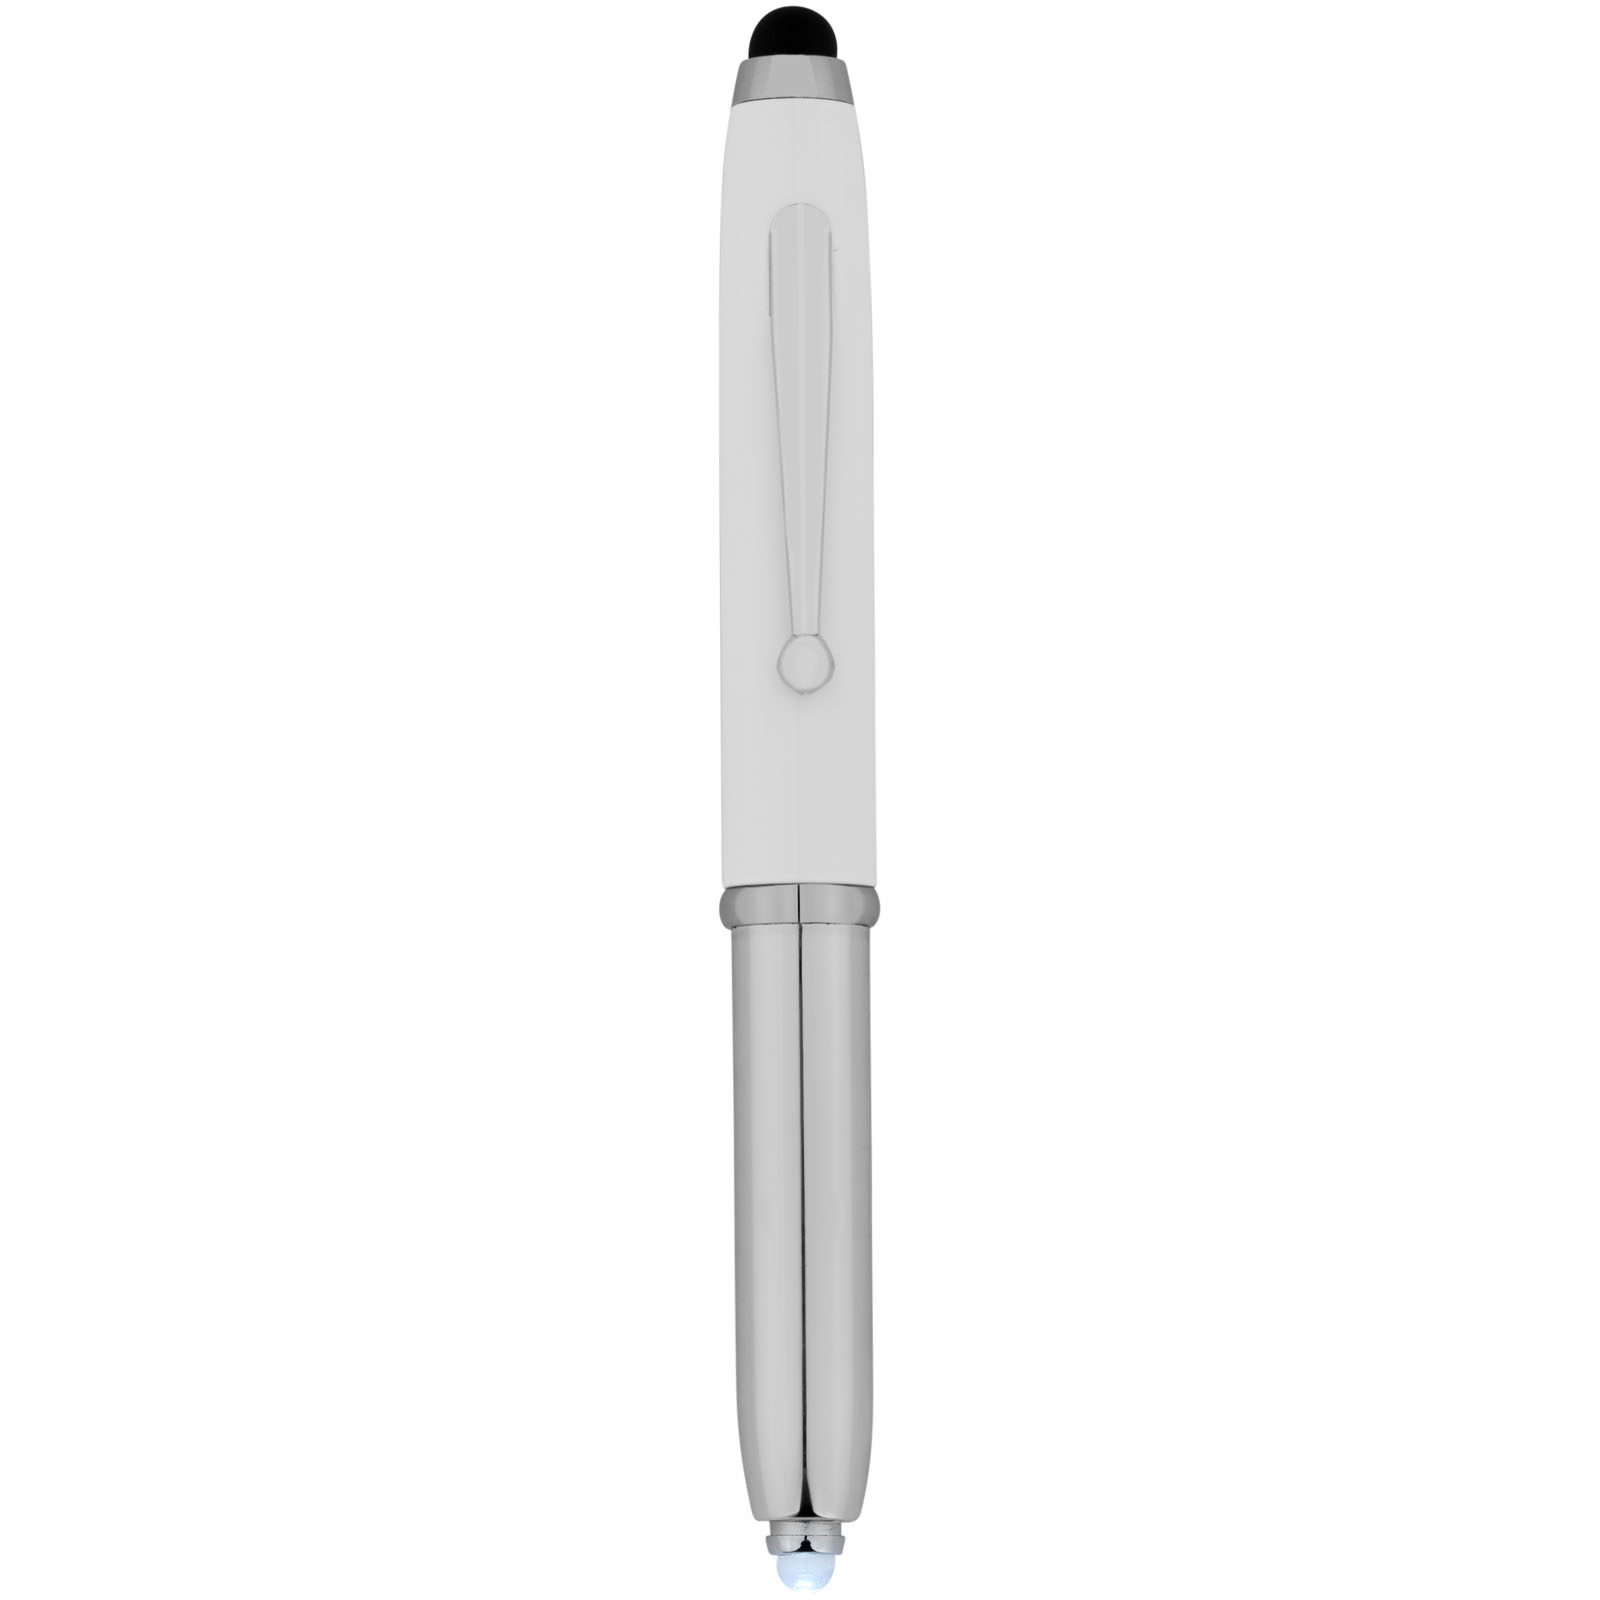 Advertising Ballpoint Pens - Xenon stylus ballpoint pen with LED light - 1